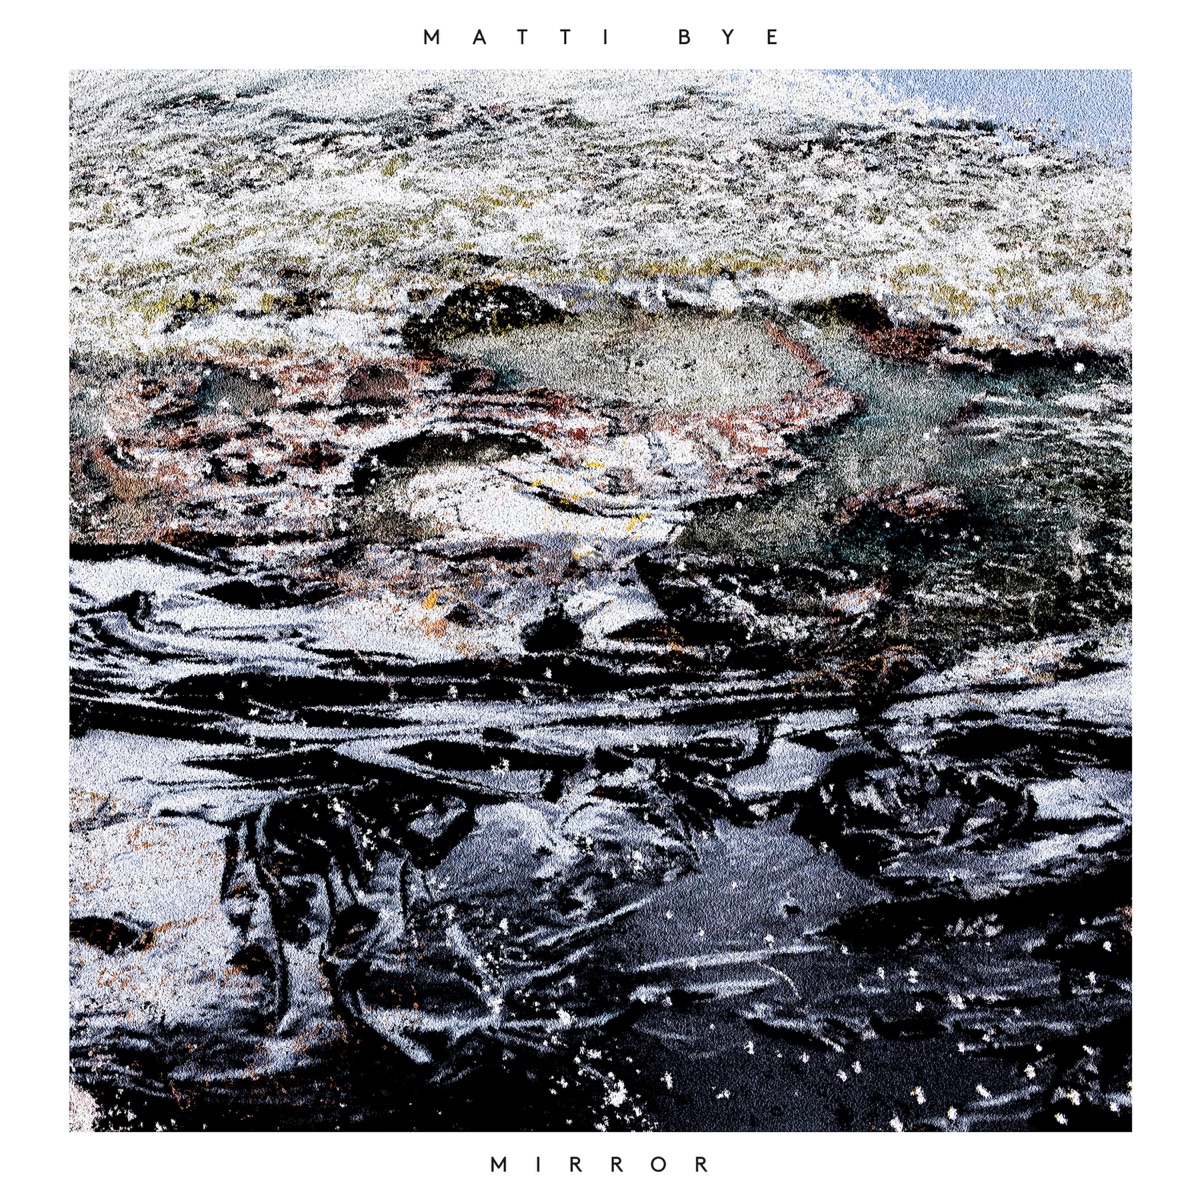 The Piano Ship - Single” álbum de Matti Bye en Apple Music